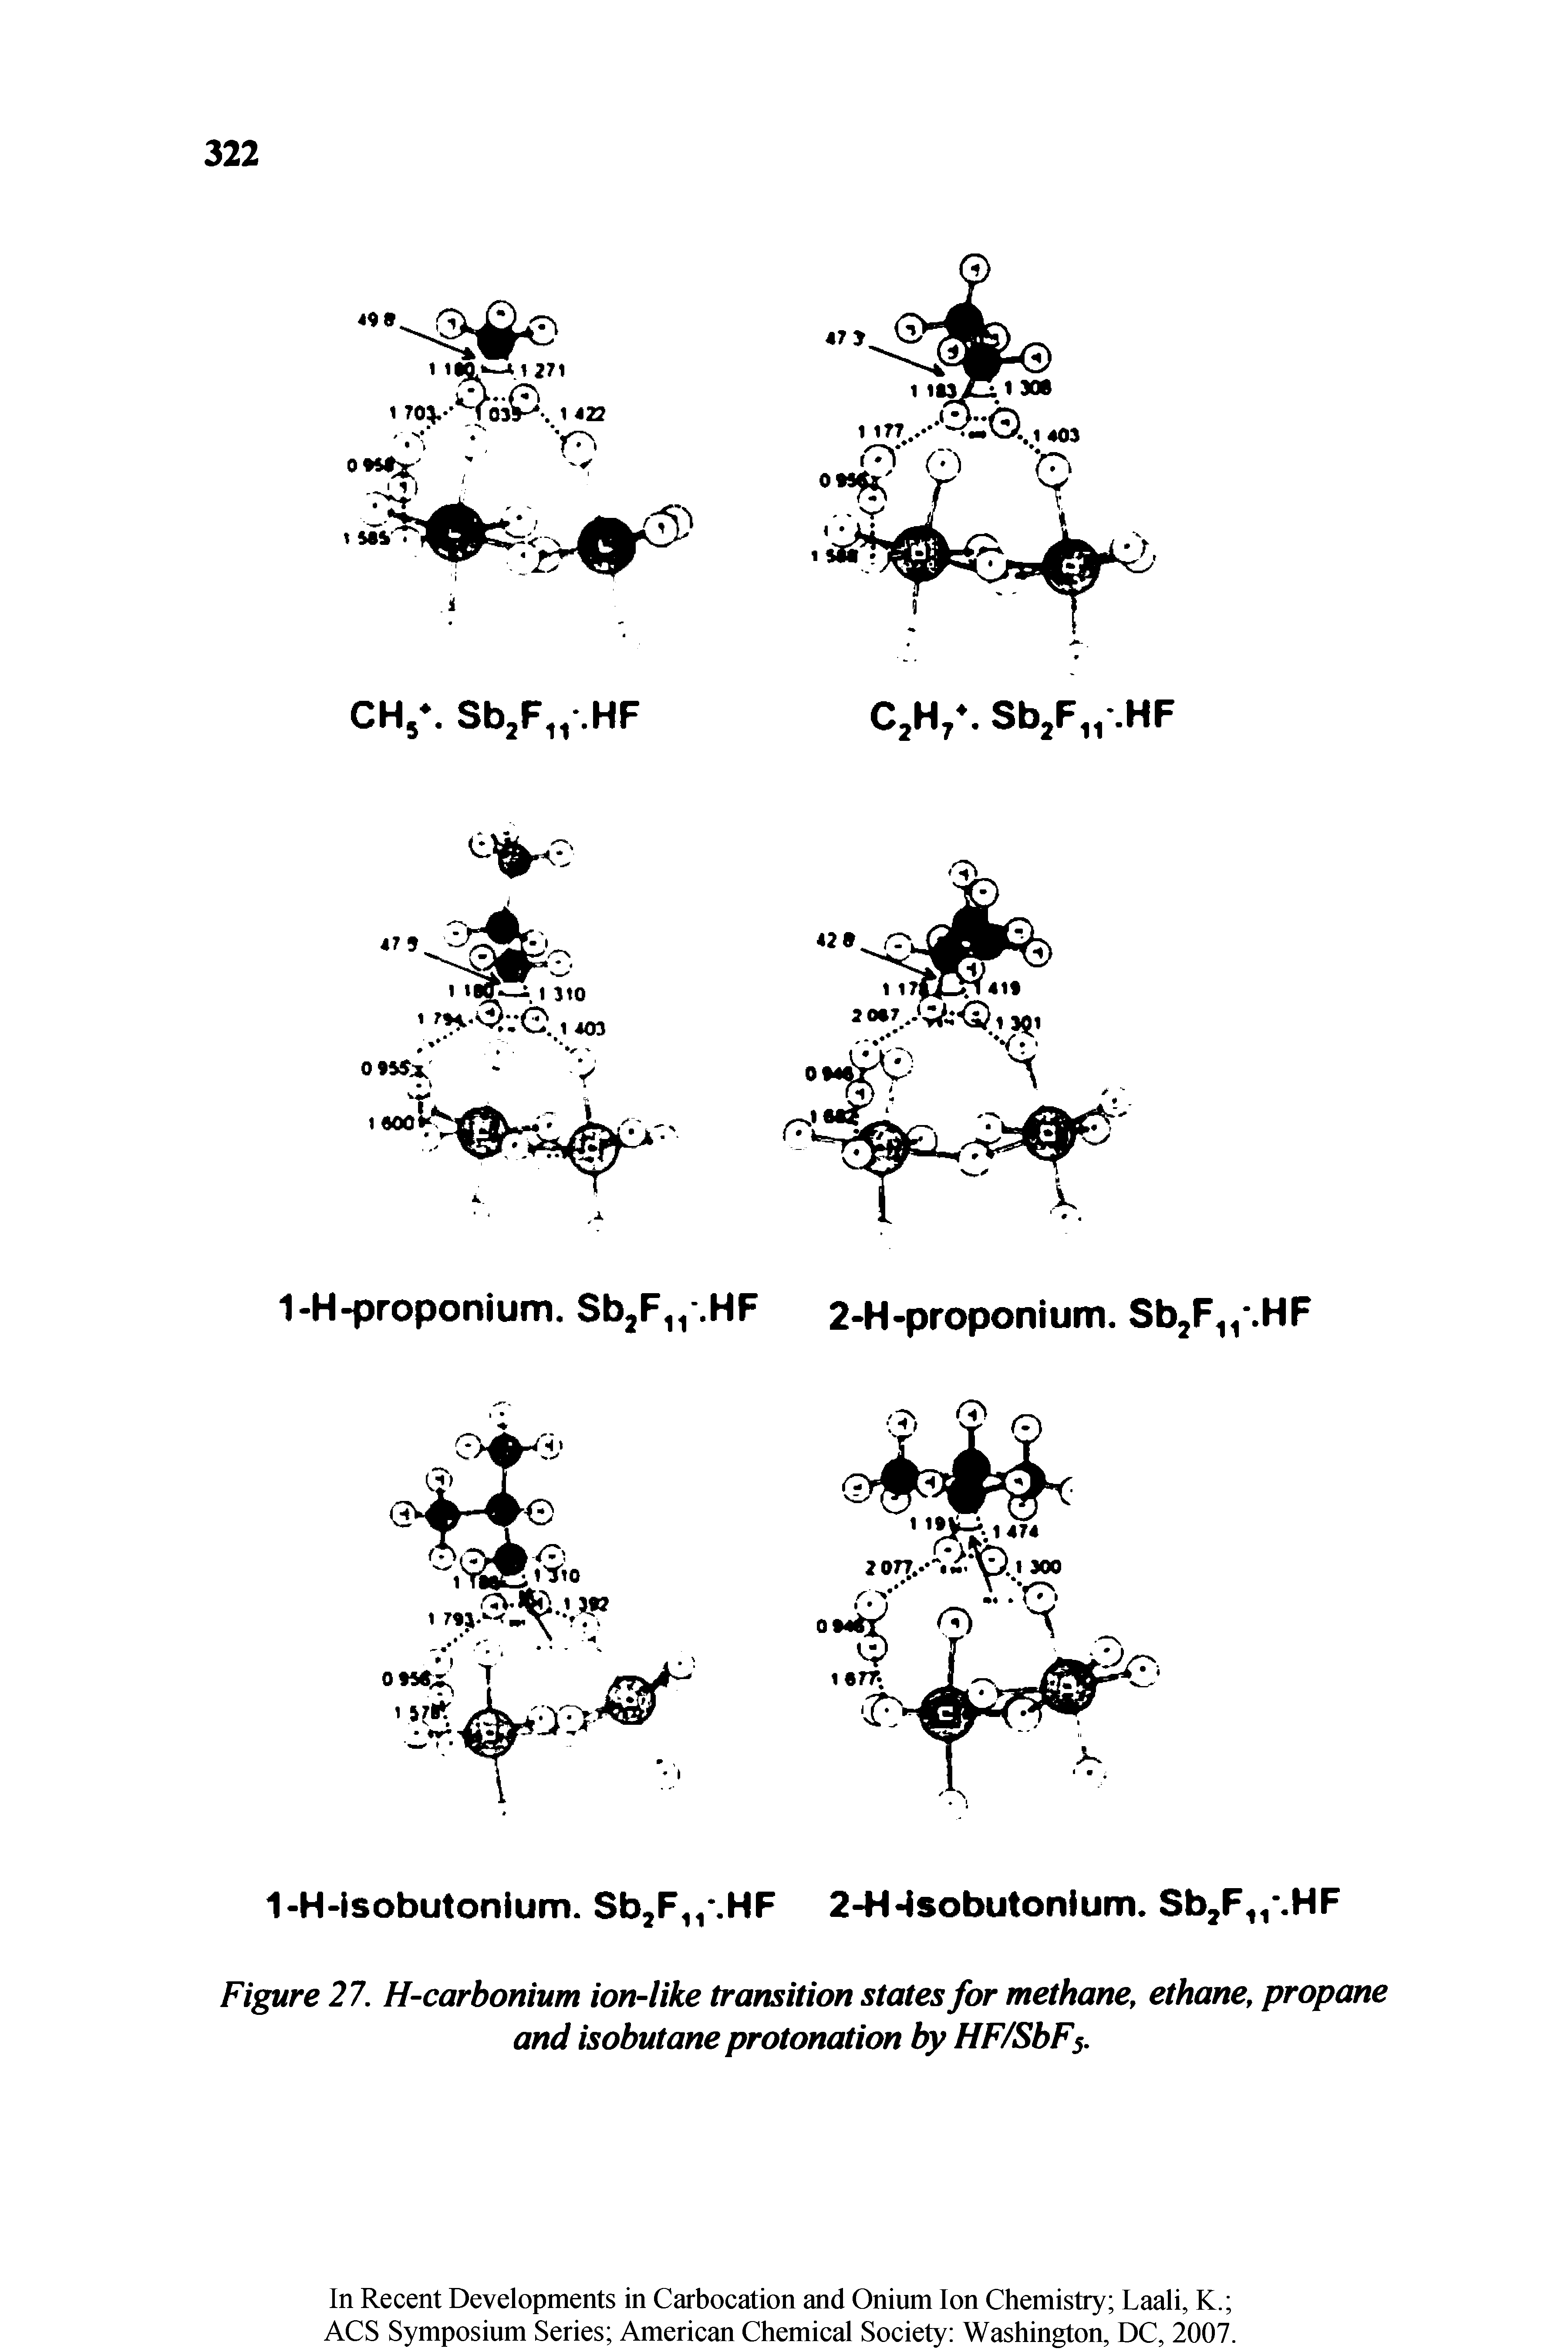 Figure 27. H-carbonium ion-like transition states for methane, ethane, propane and isobutane protonation by HF/SbFs.